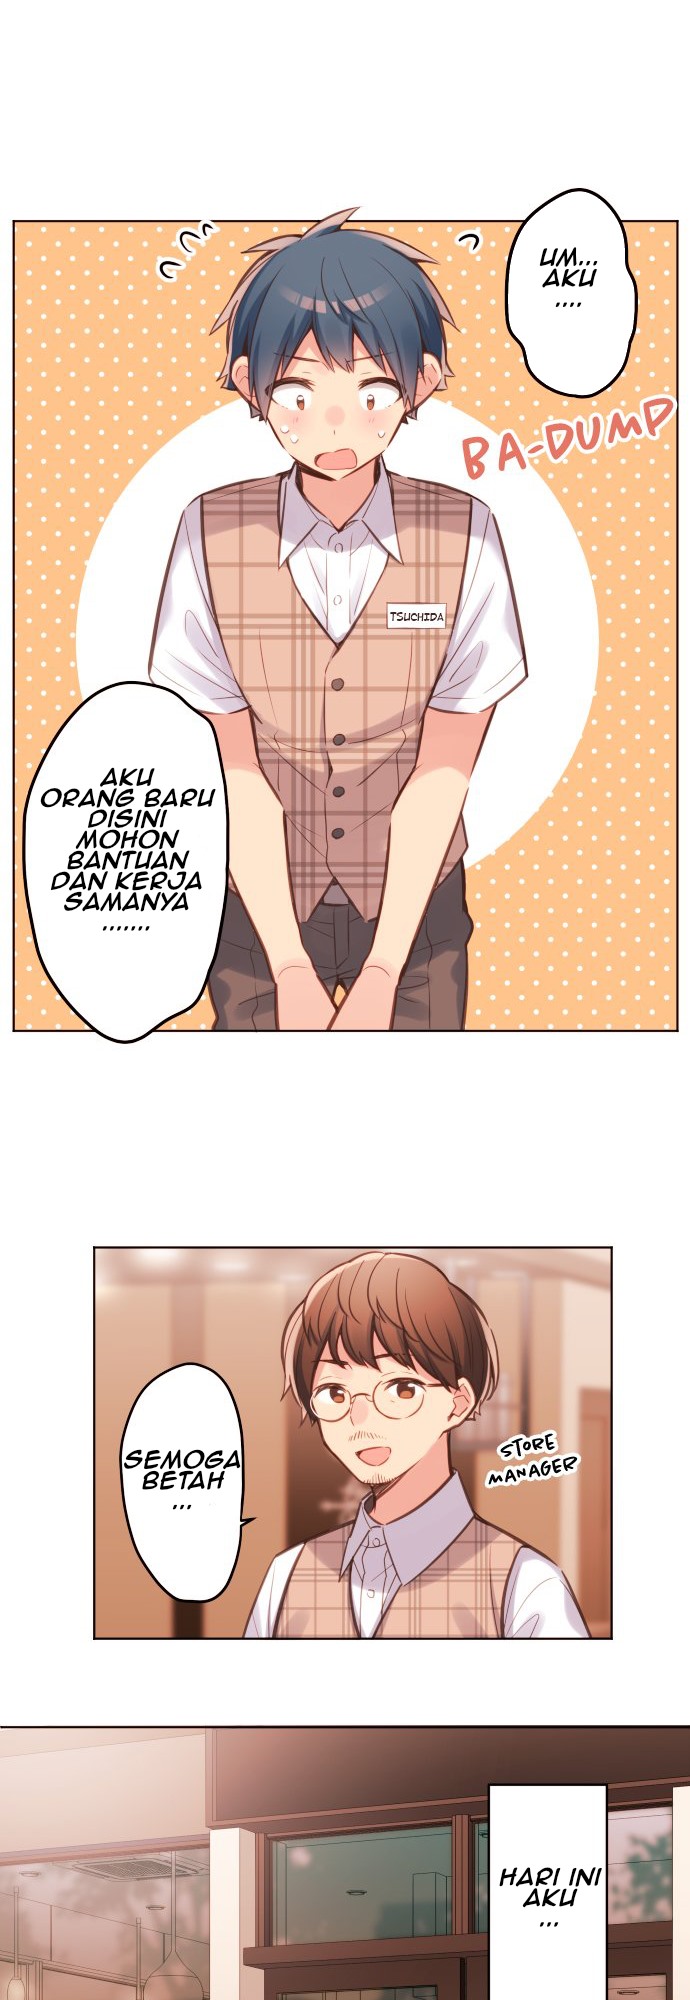 Waka-chan Is Flirty Again Chapter 31 22